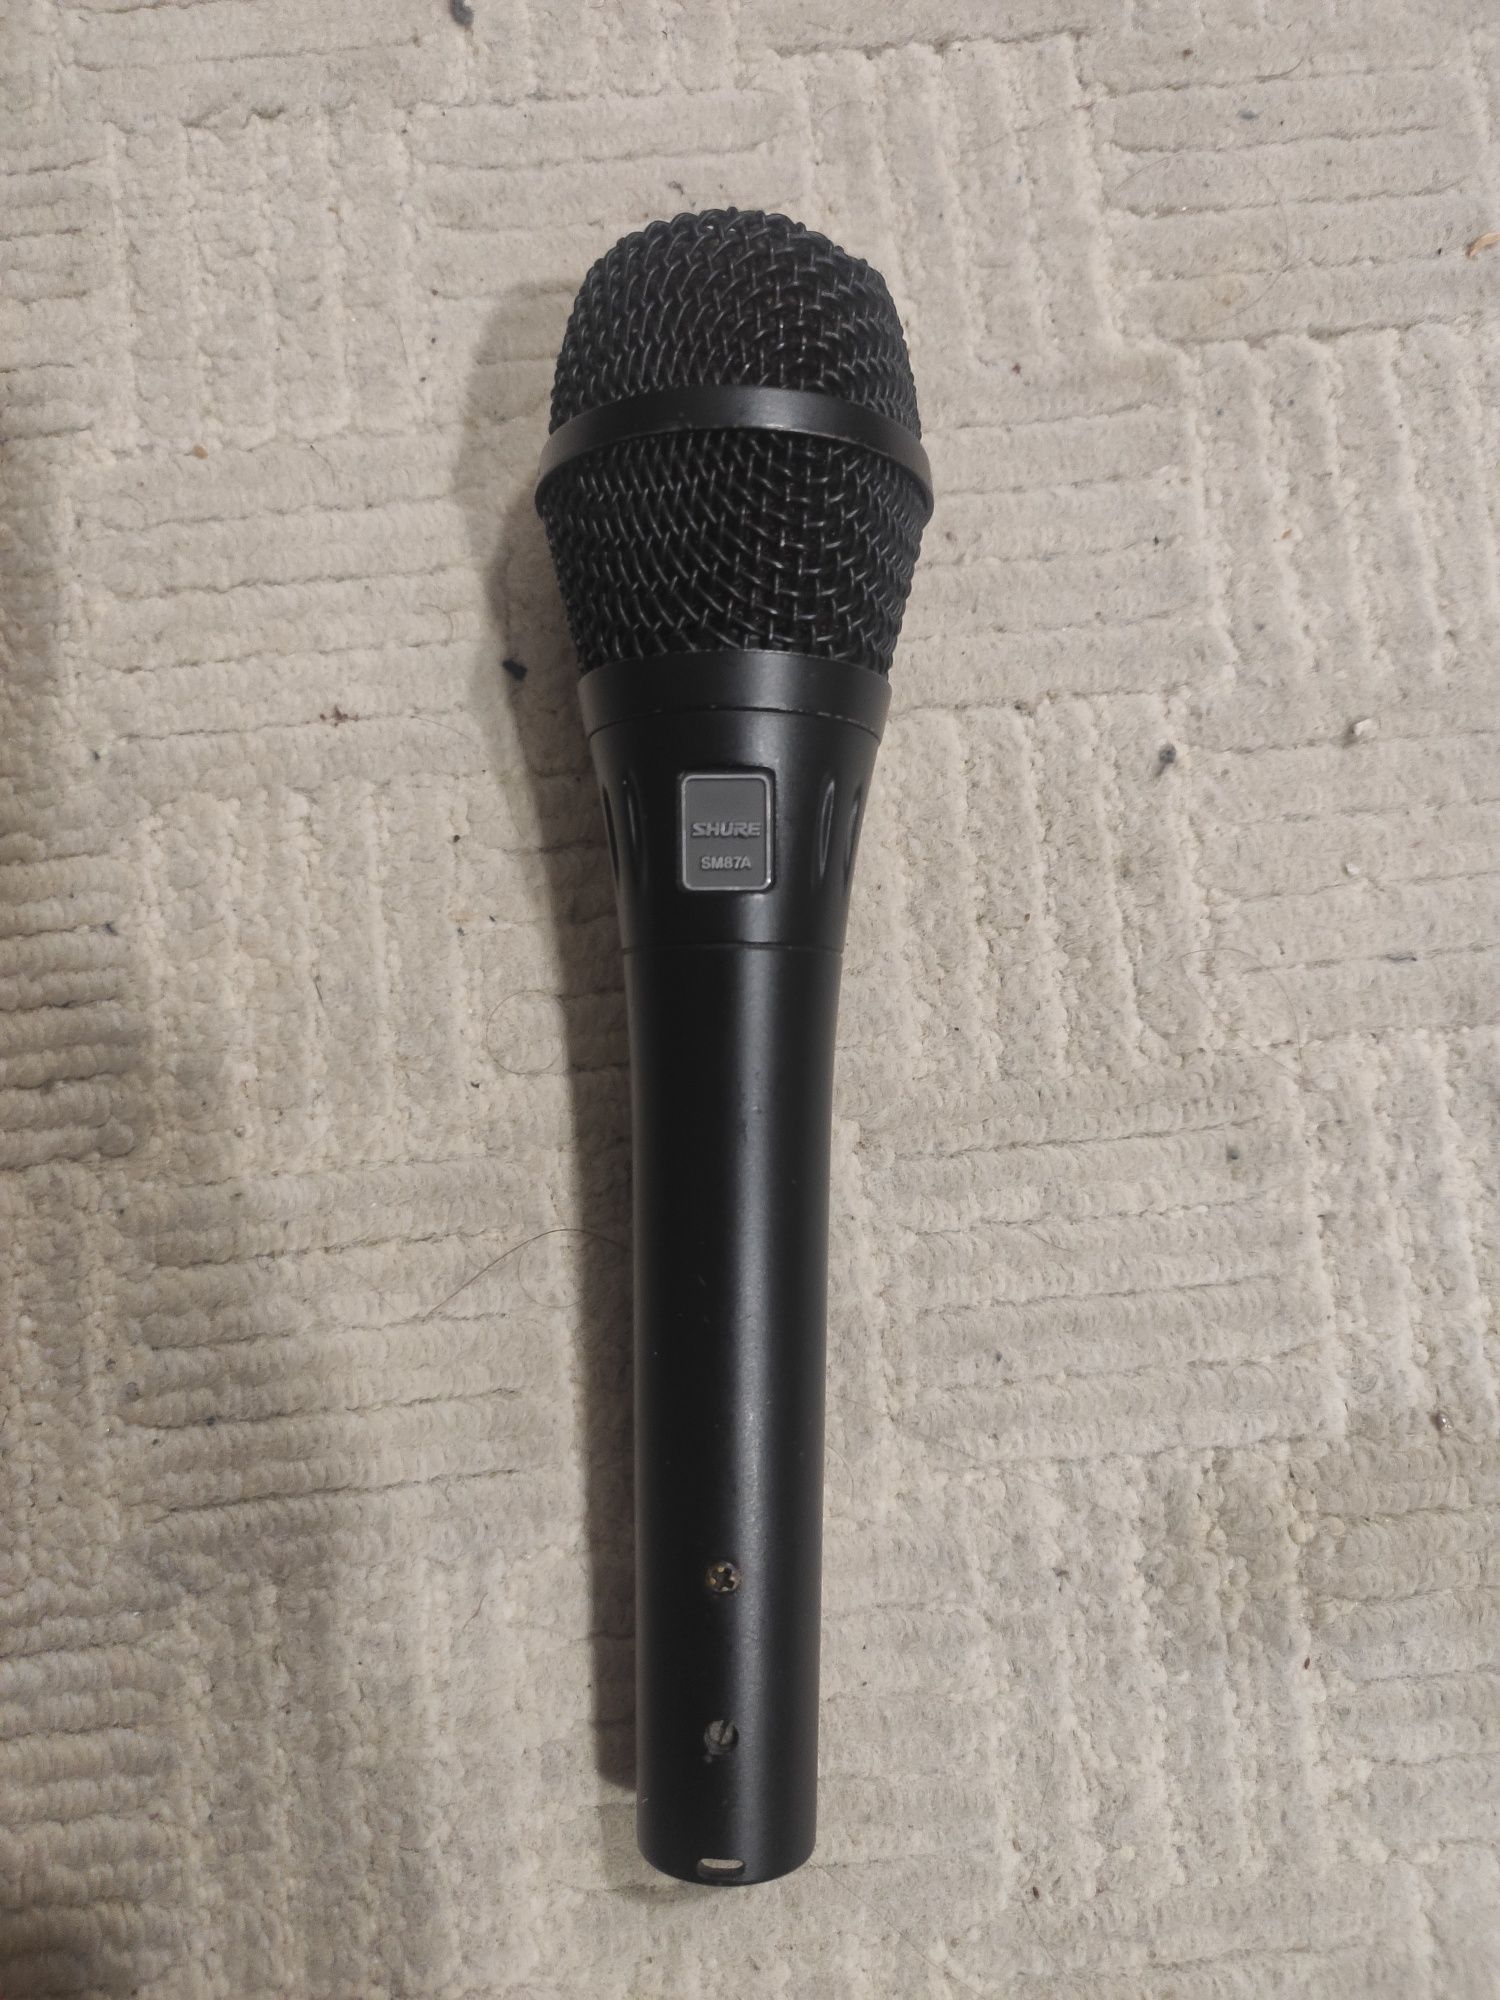 Shure SM 87A microfone